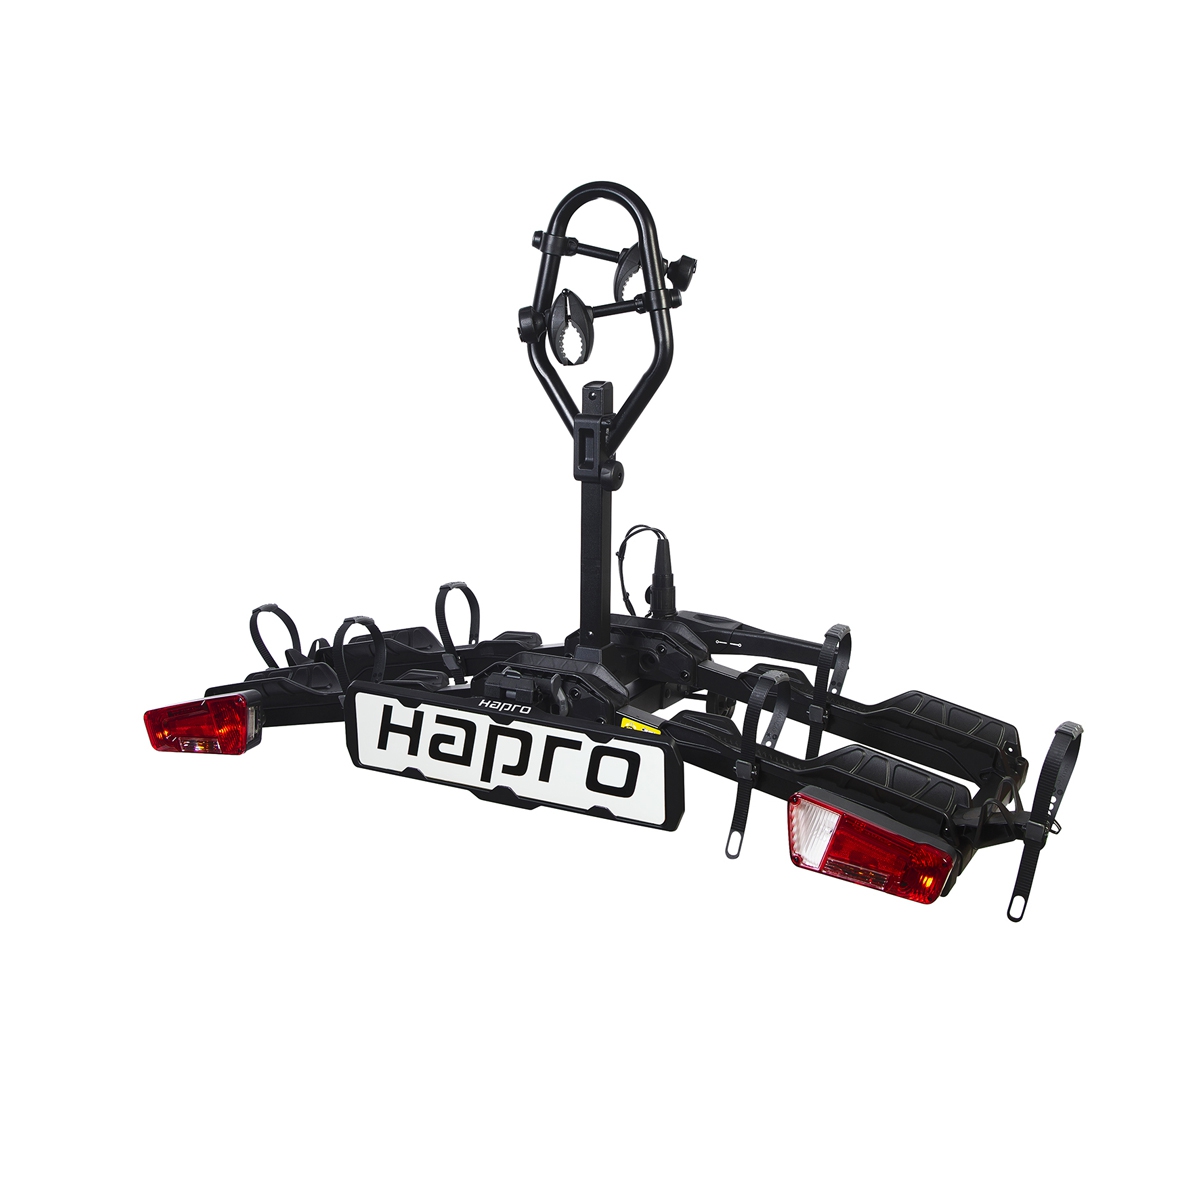 Hapro Atlas Premium Xfold II 2.0 Fahrradtraeger faltbar 2 Fahrraeder 34717 fuer 3 Raeder 2-1